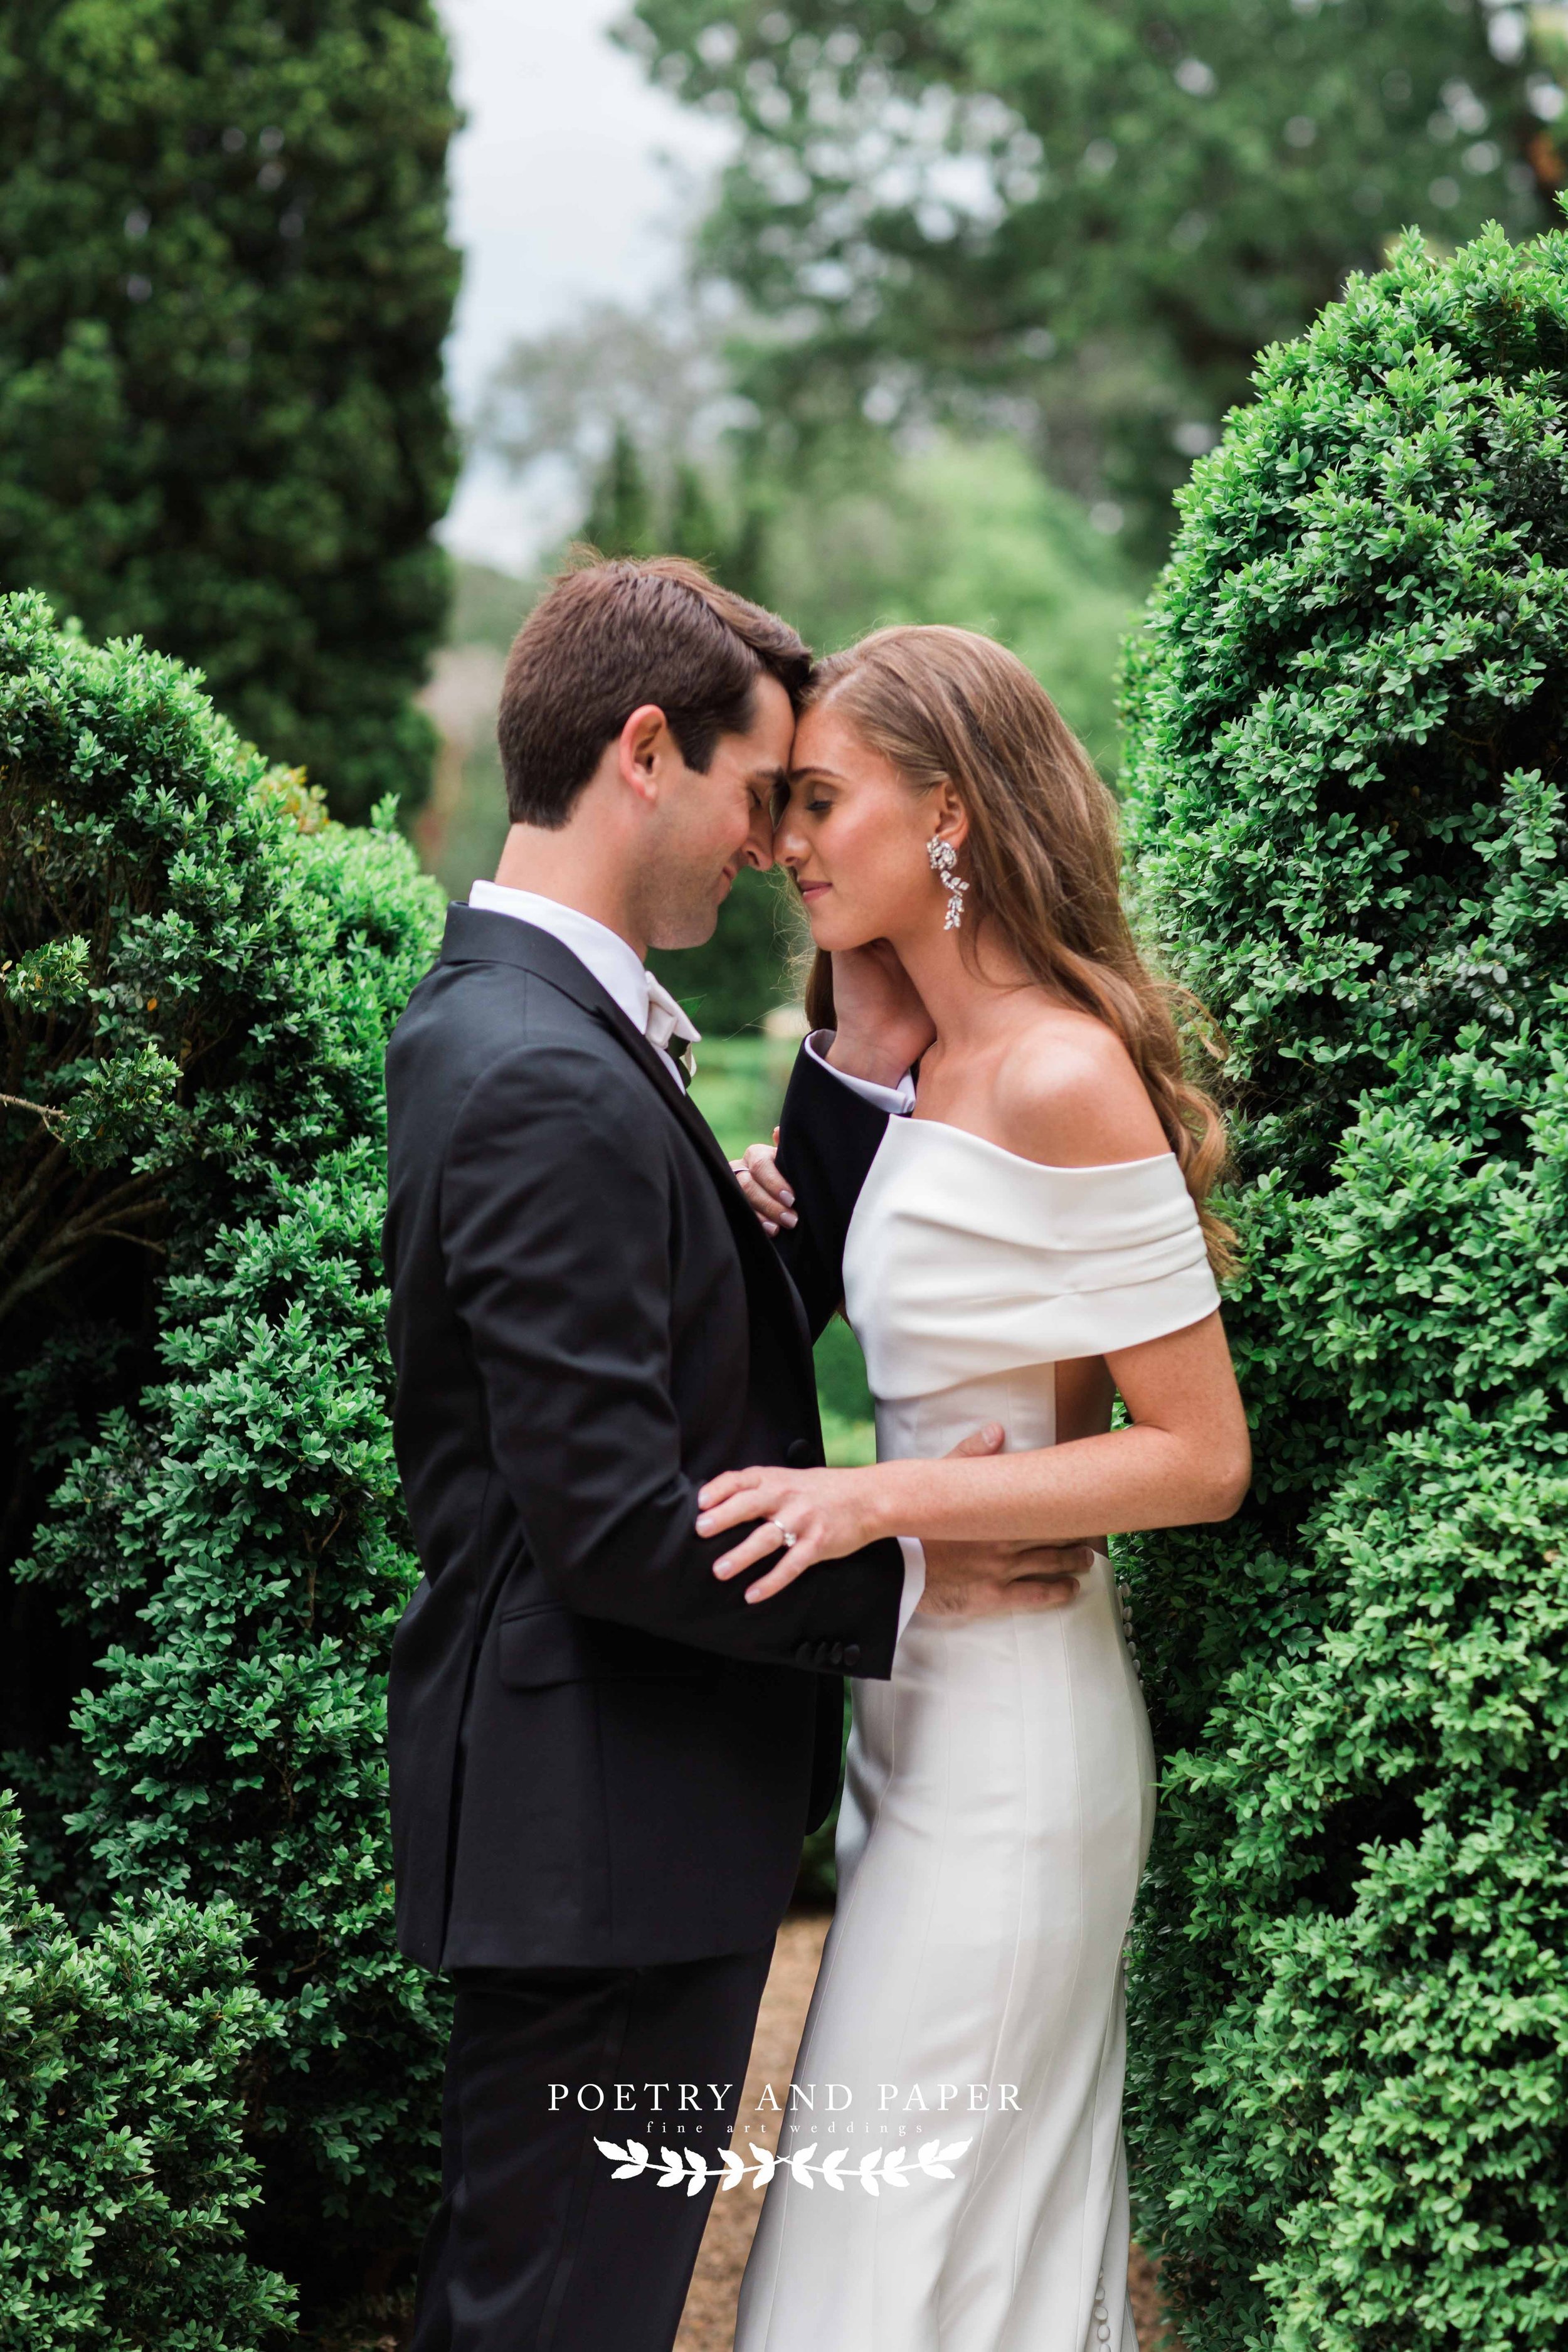 Atlanta Top Wedding Photographer-Barnsley Gardens- Poetry and Paper- couple in garden.jpg